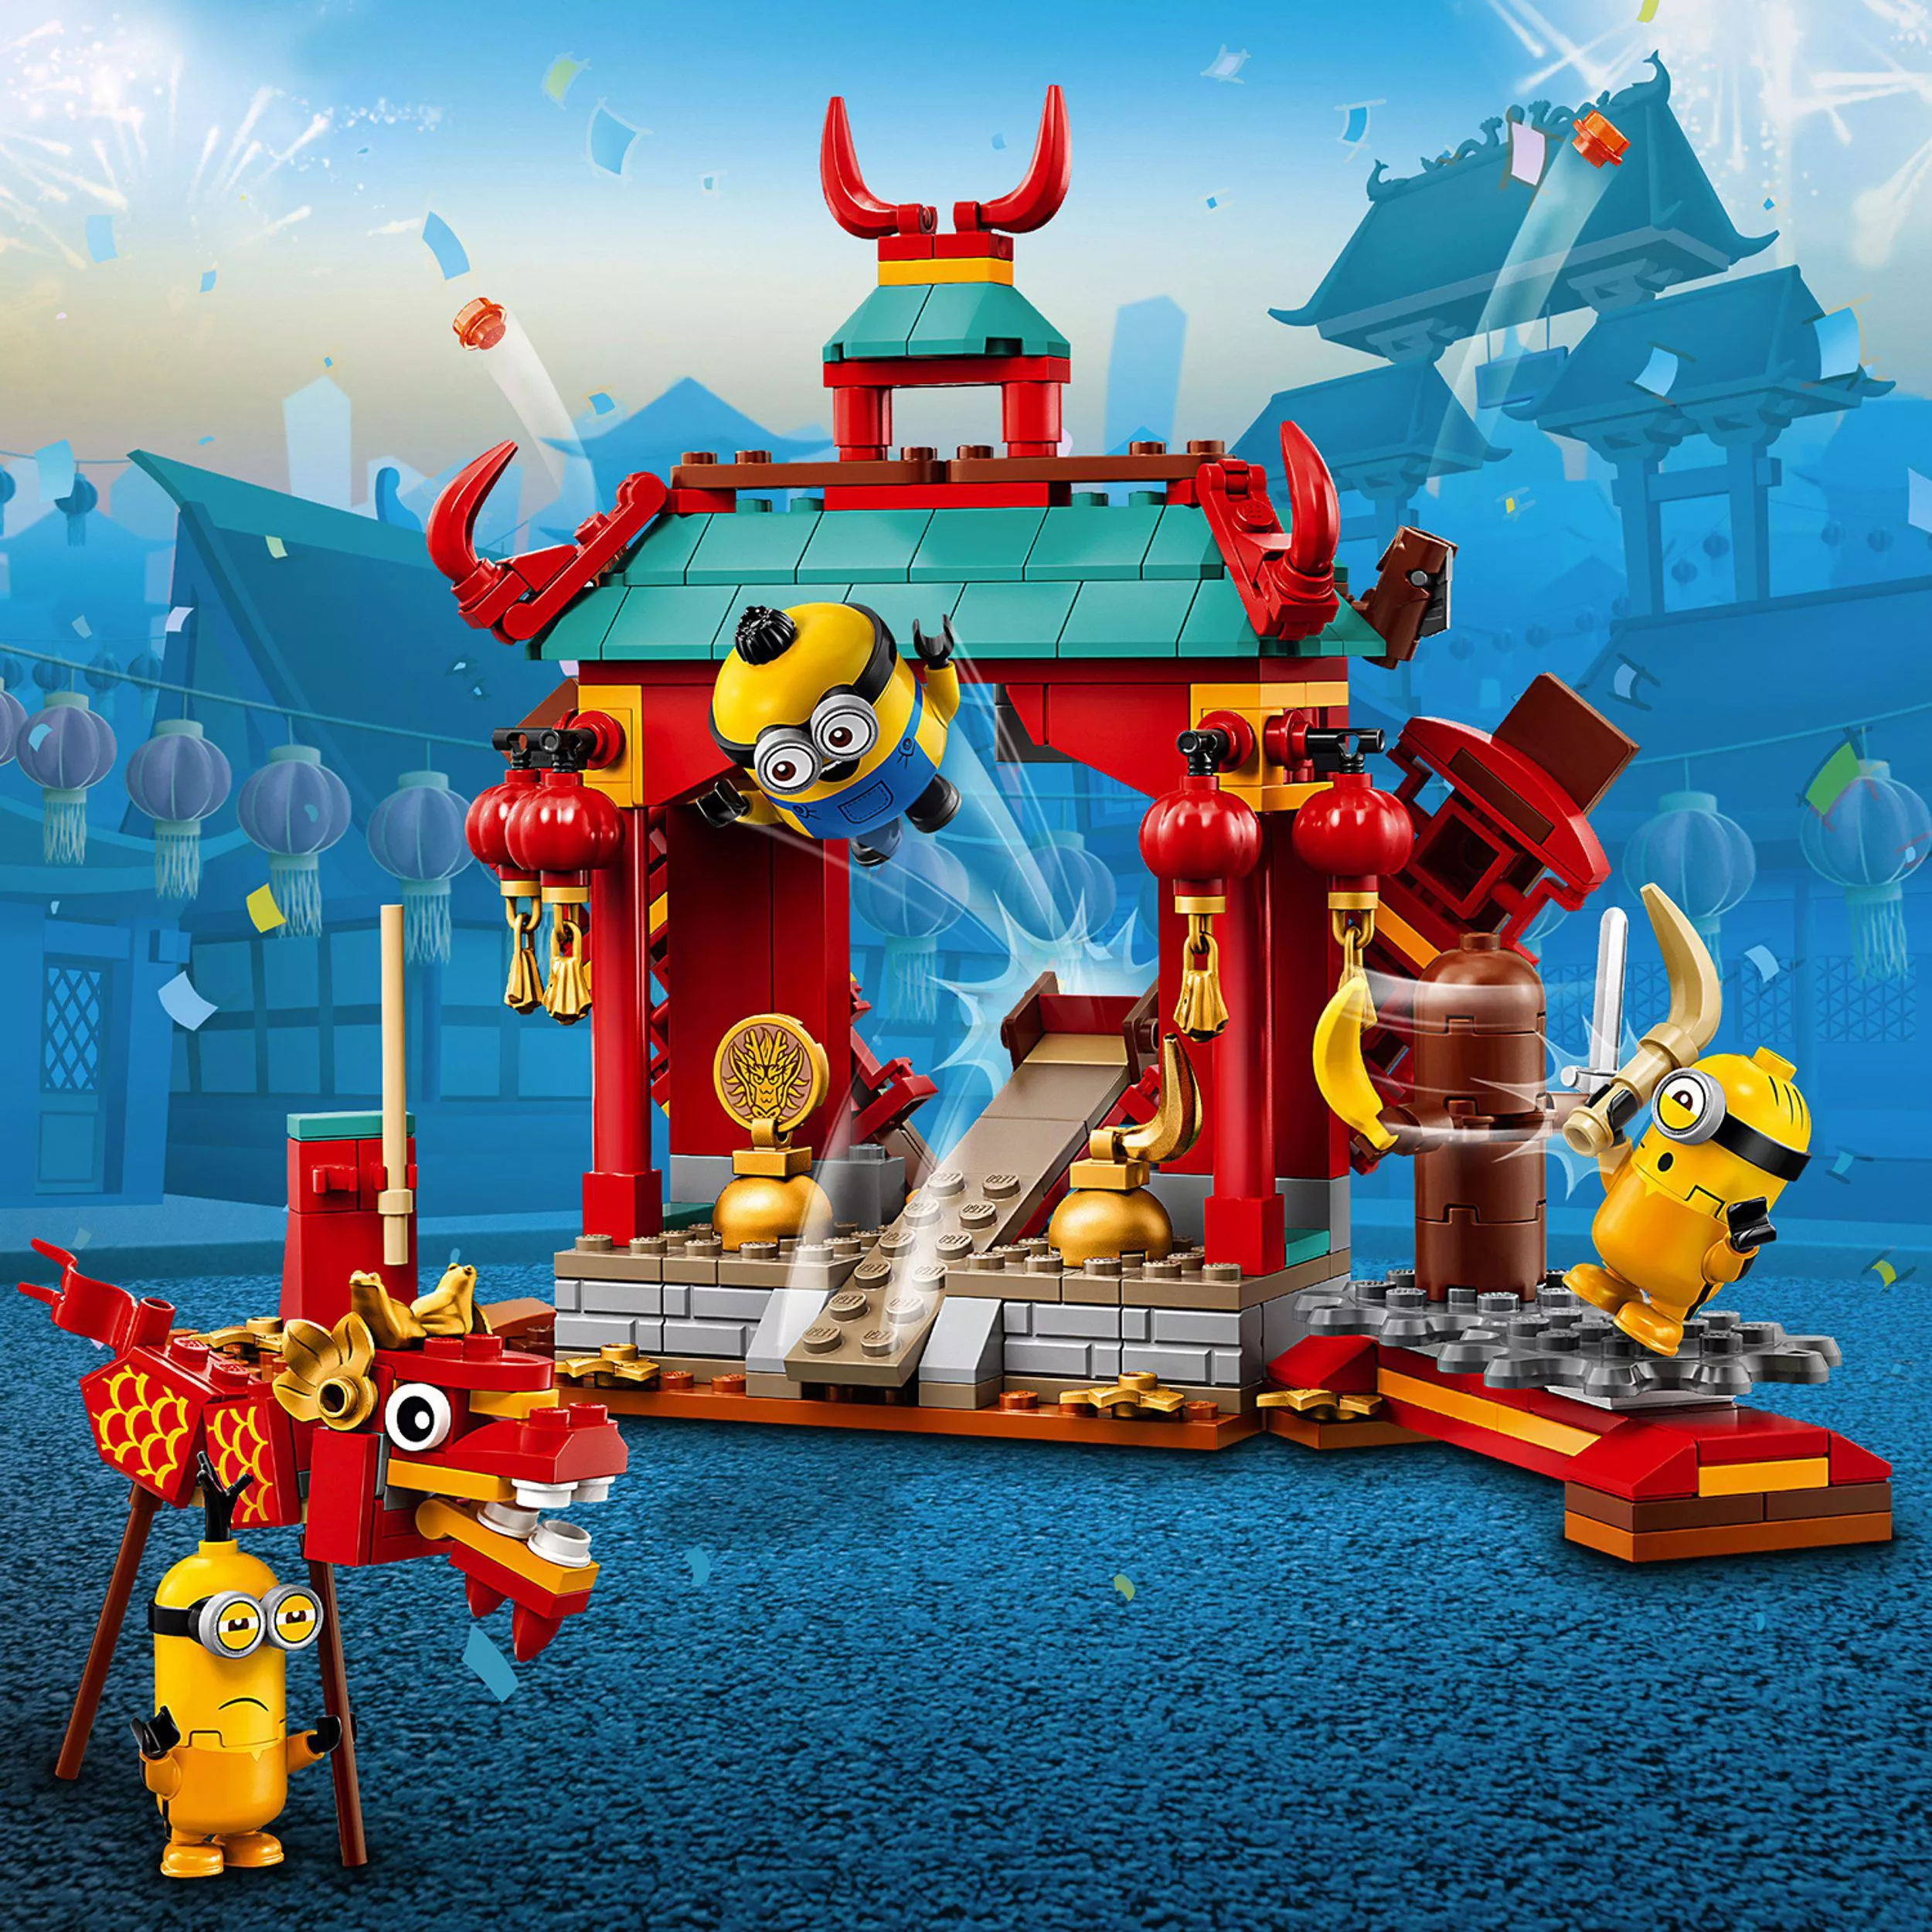 LEGO Minion Minions Kung Fu Tempel